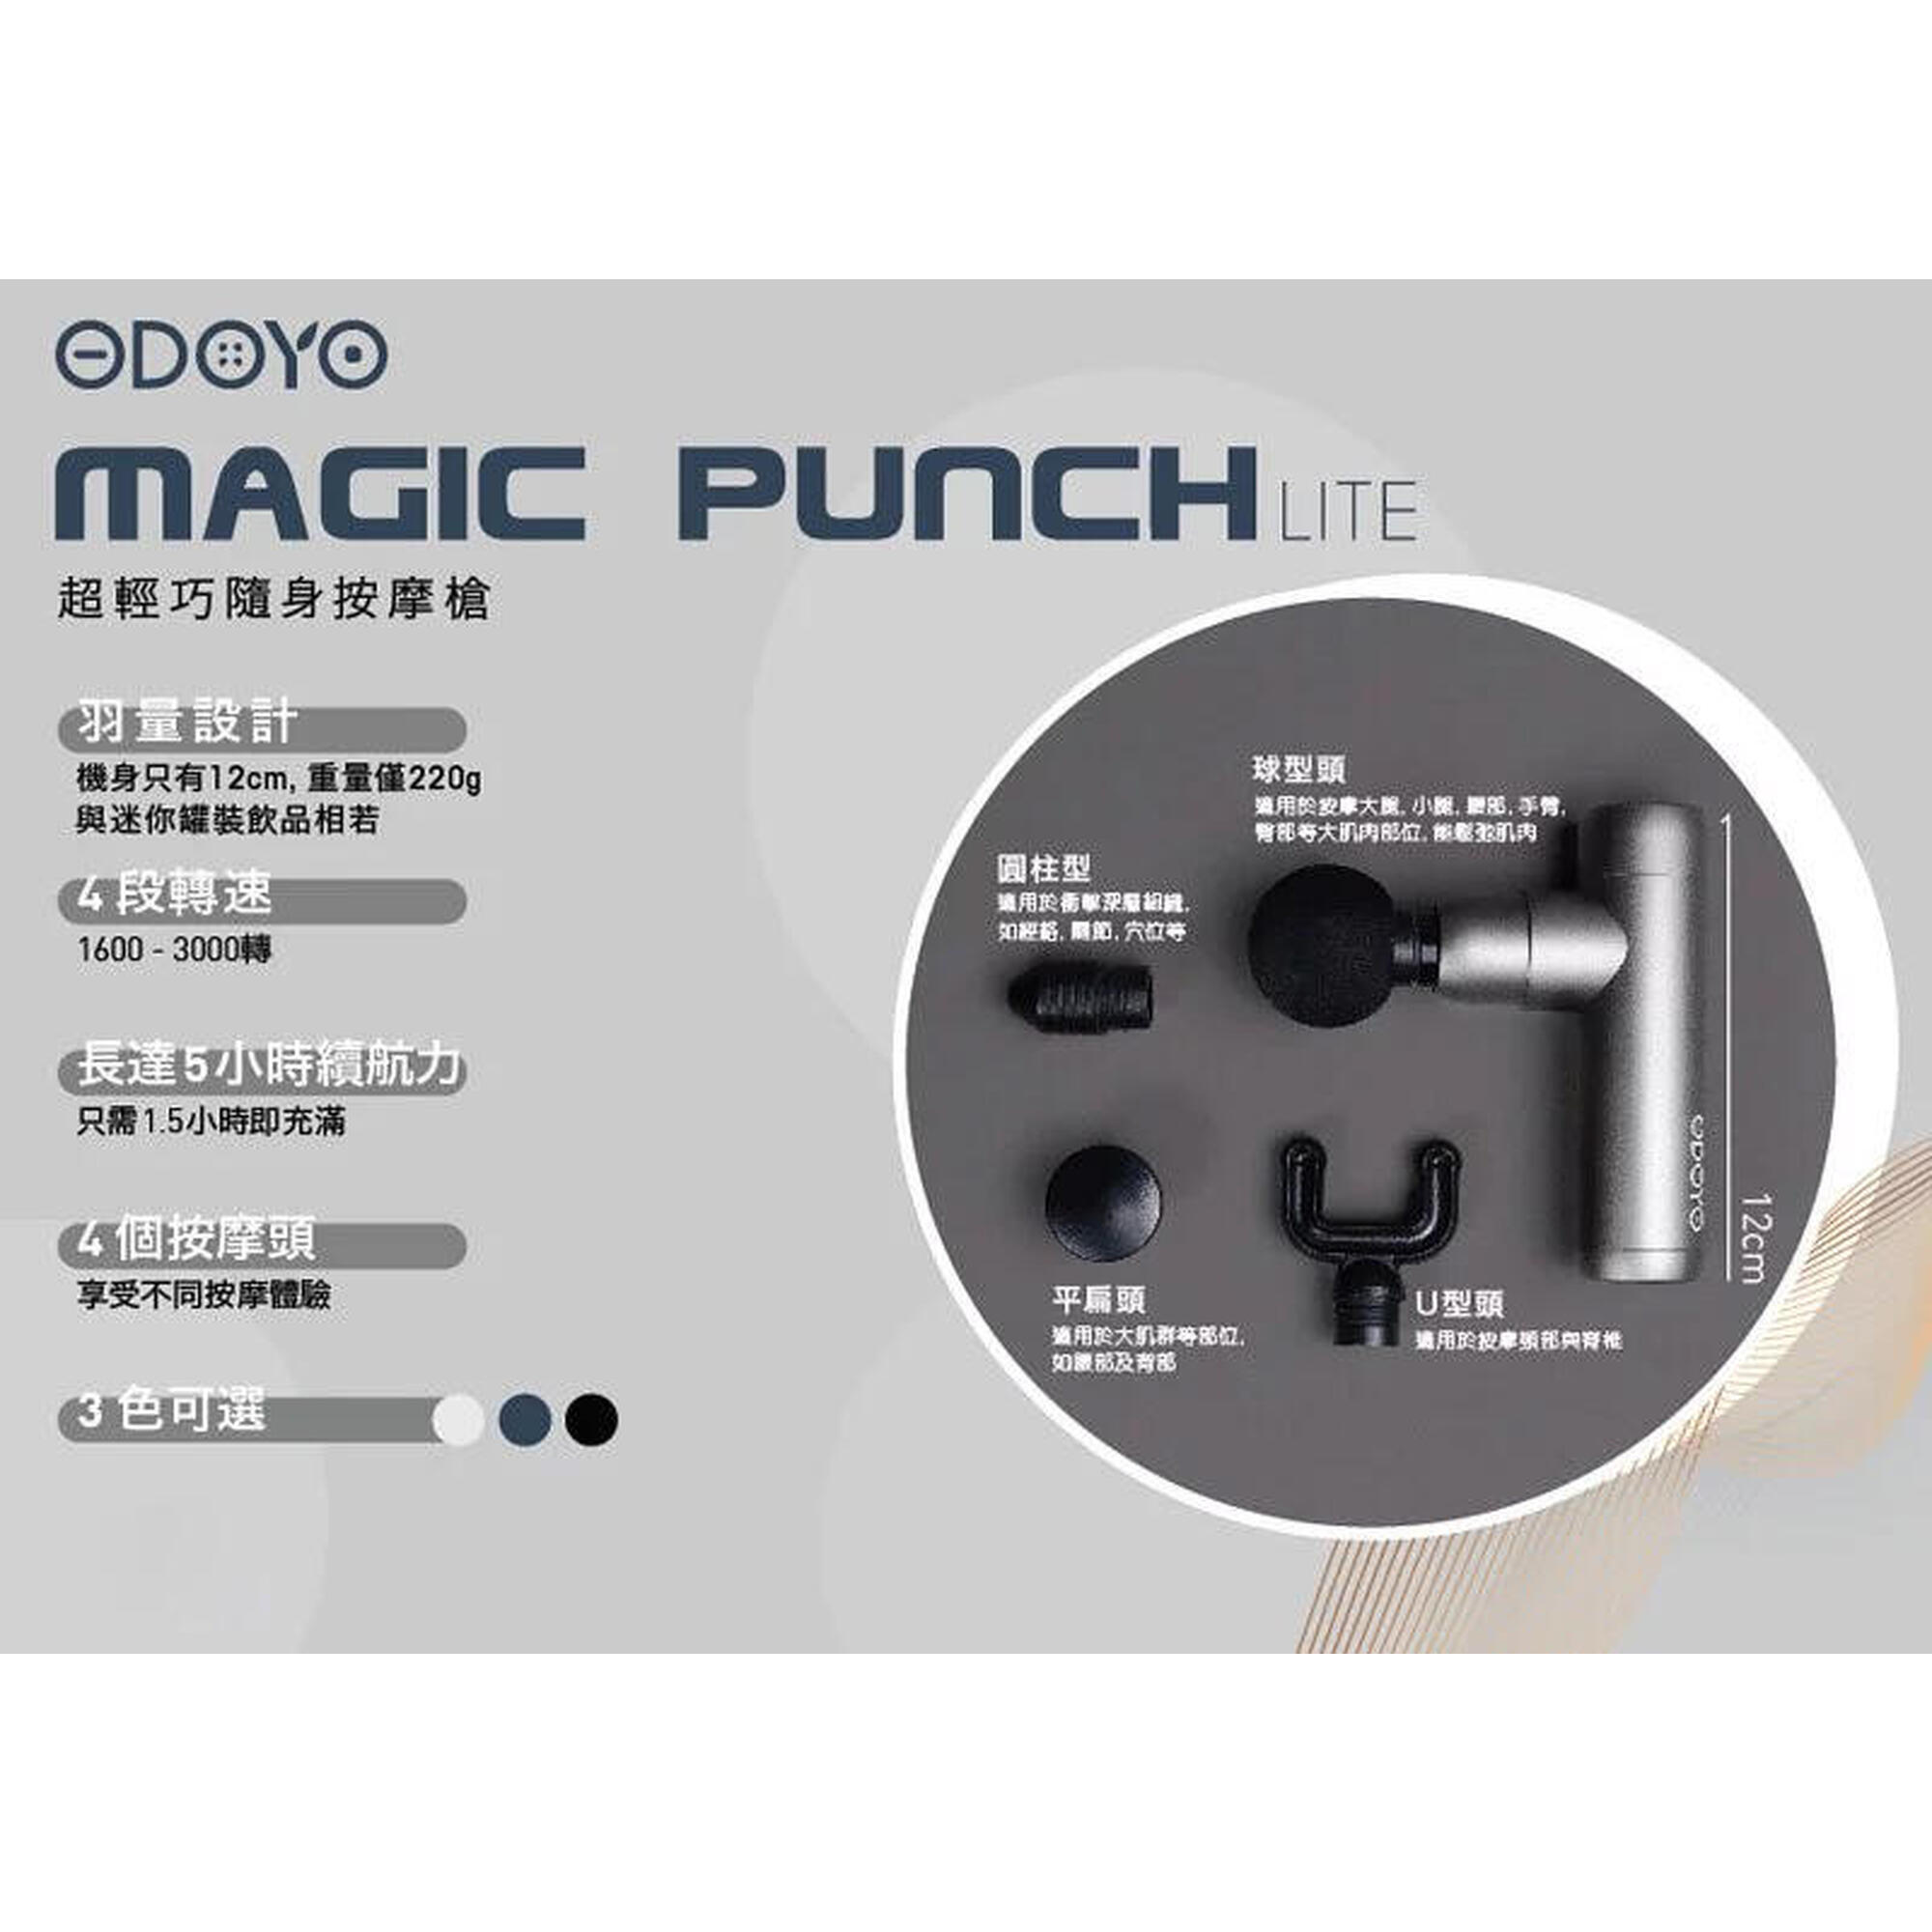 Magic Punch Lite Ultra-light Portable Massage Gun - Black